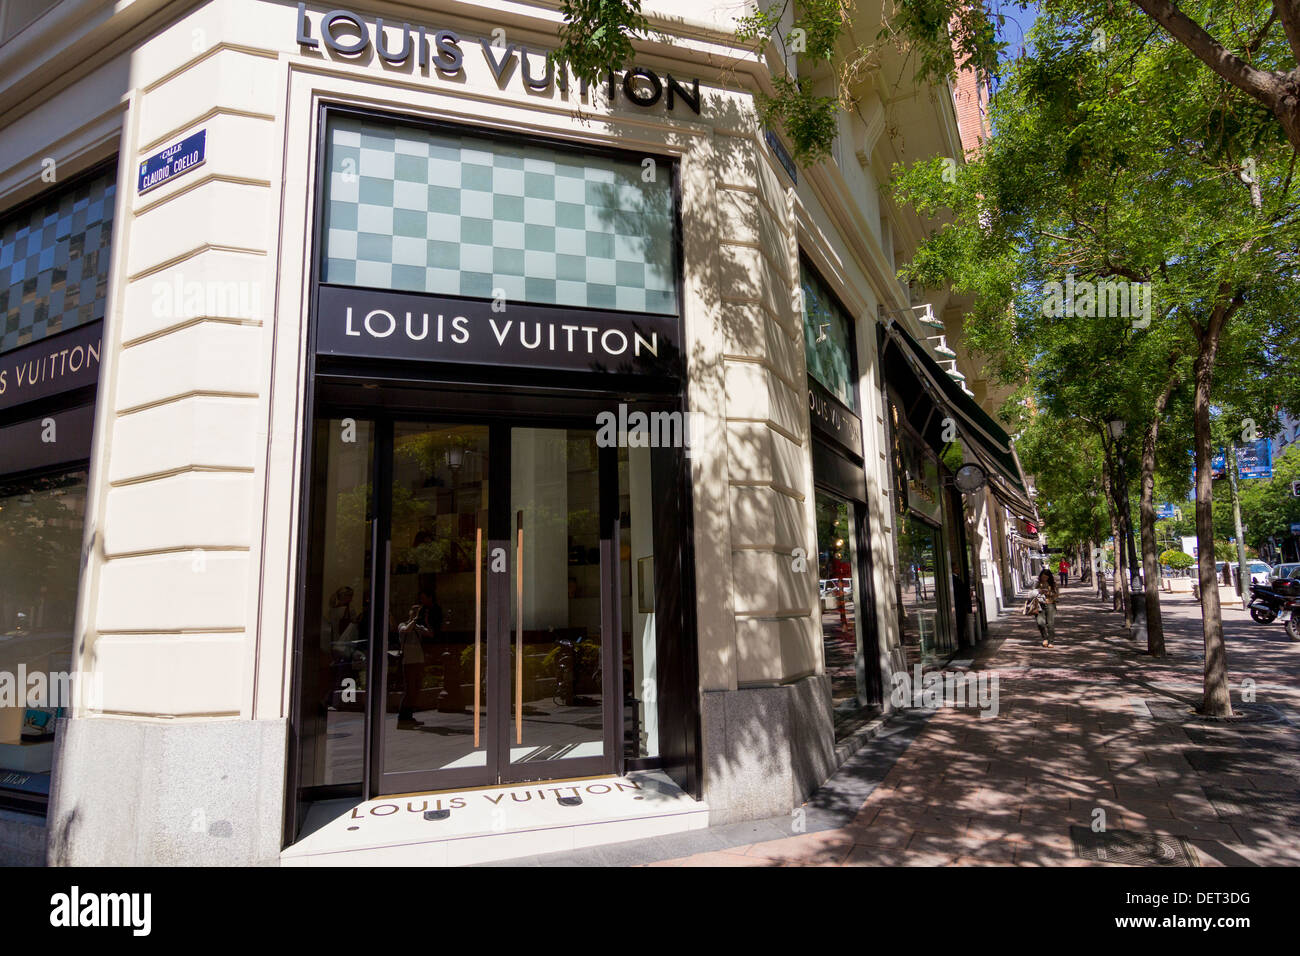 20+ Louis Vuitton Spain Stock Photos, Pictures & Royalty-Free